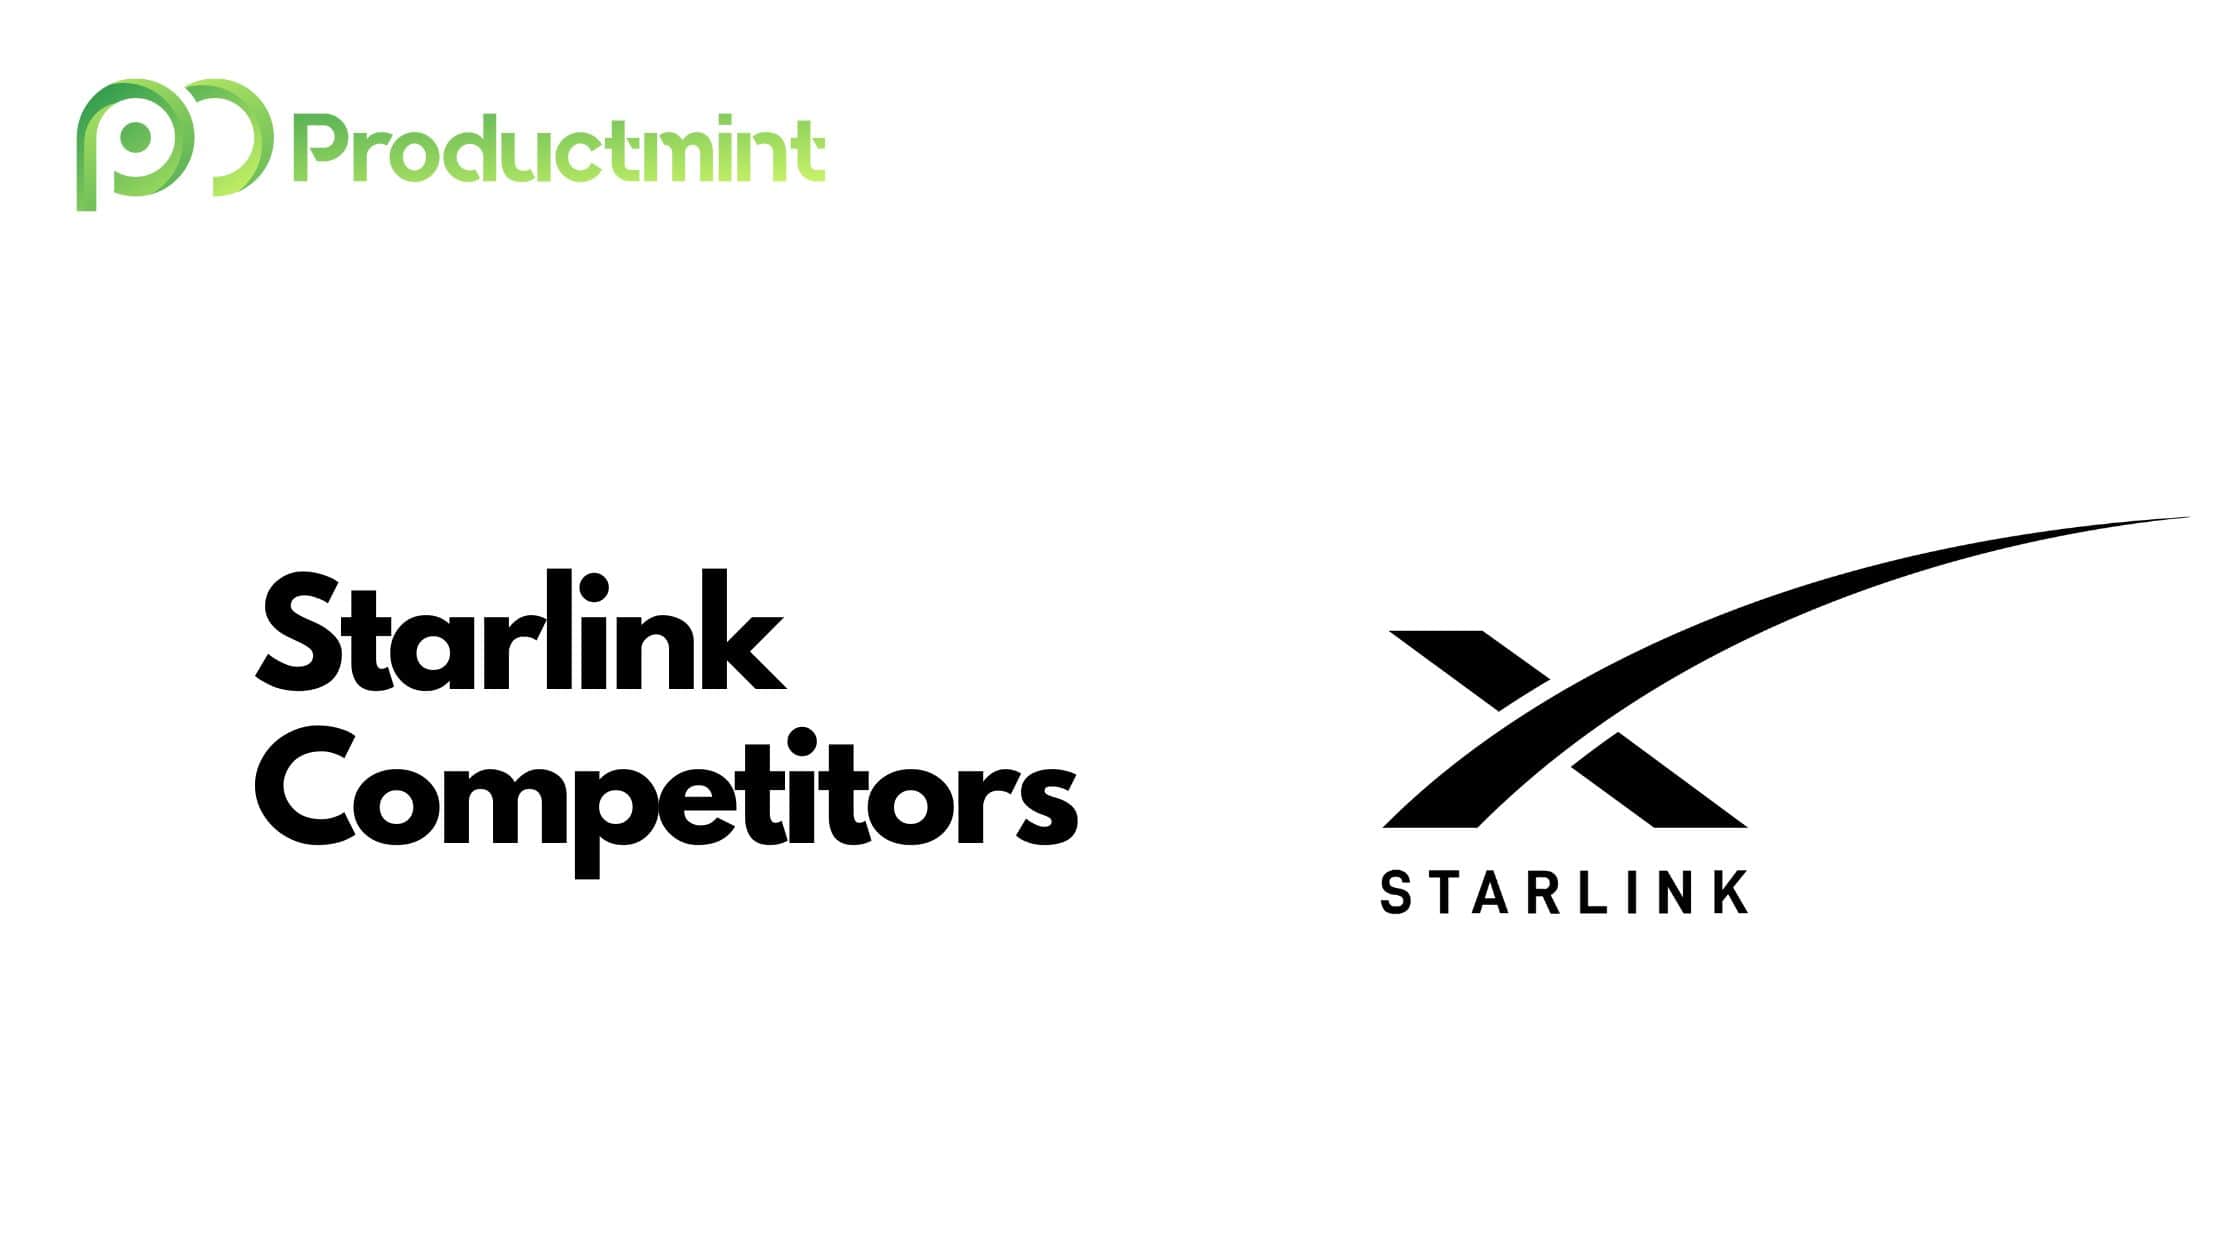 Starlink Competitors